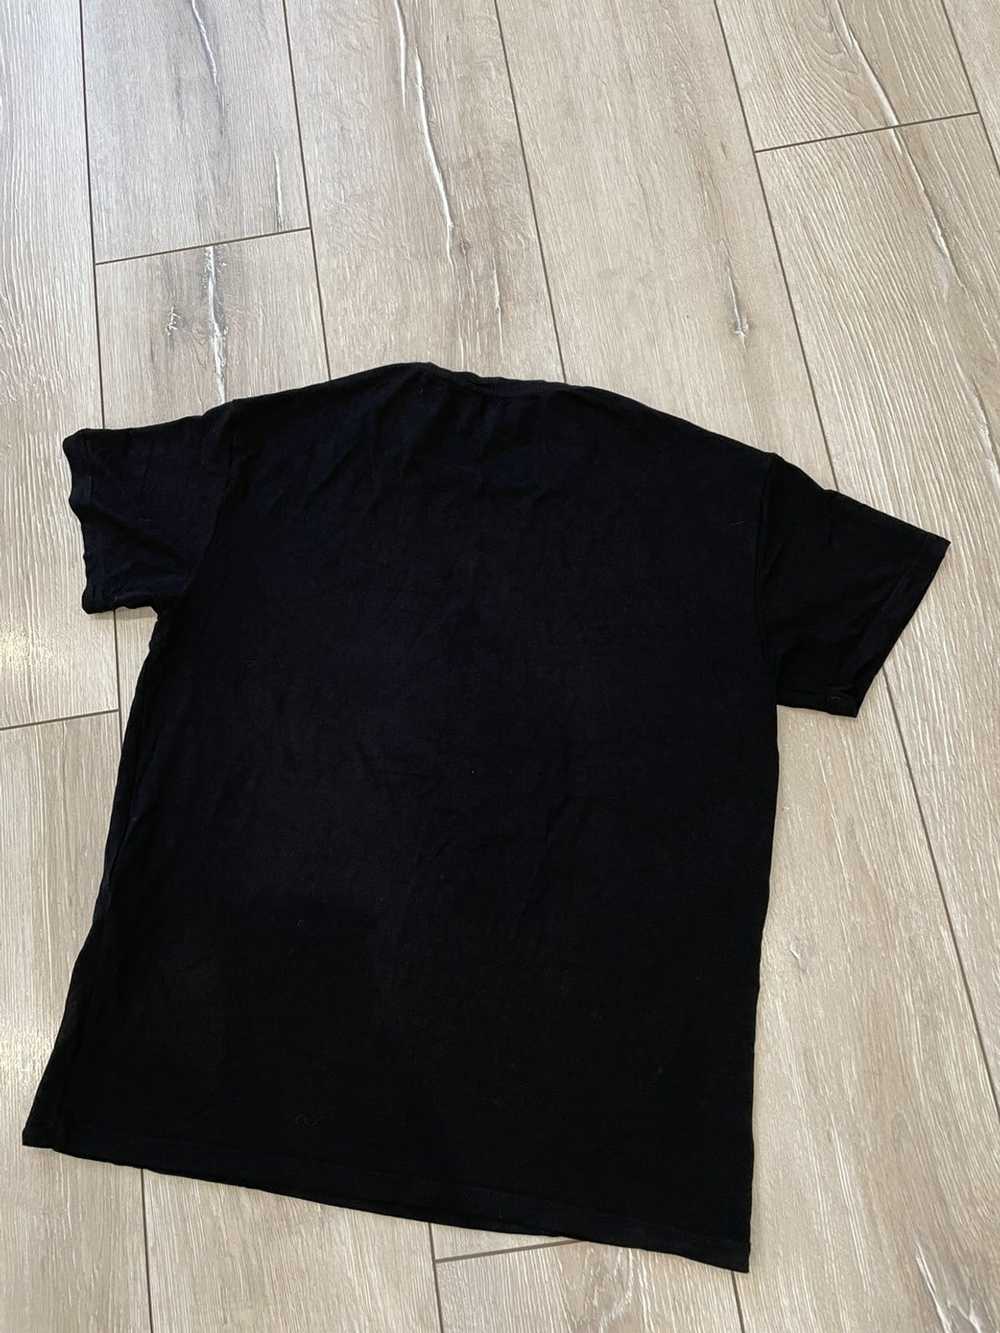 Emporio Armani × Streetwear Emporio Armani t shirt - image 4